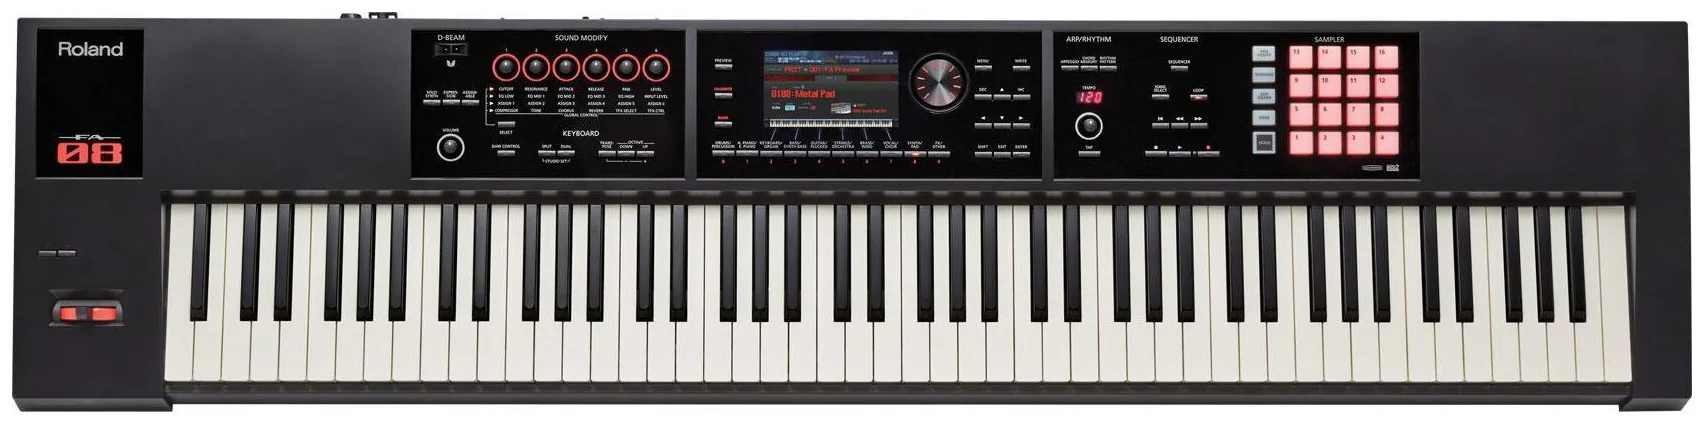 Roland FA-08 - размер клавиш: полноразмерные